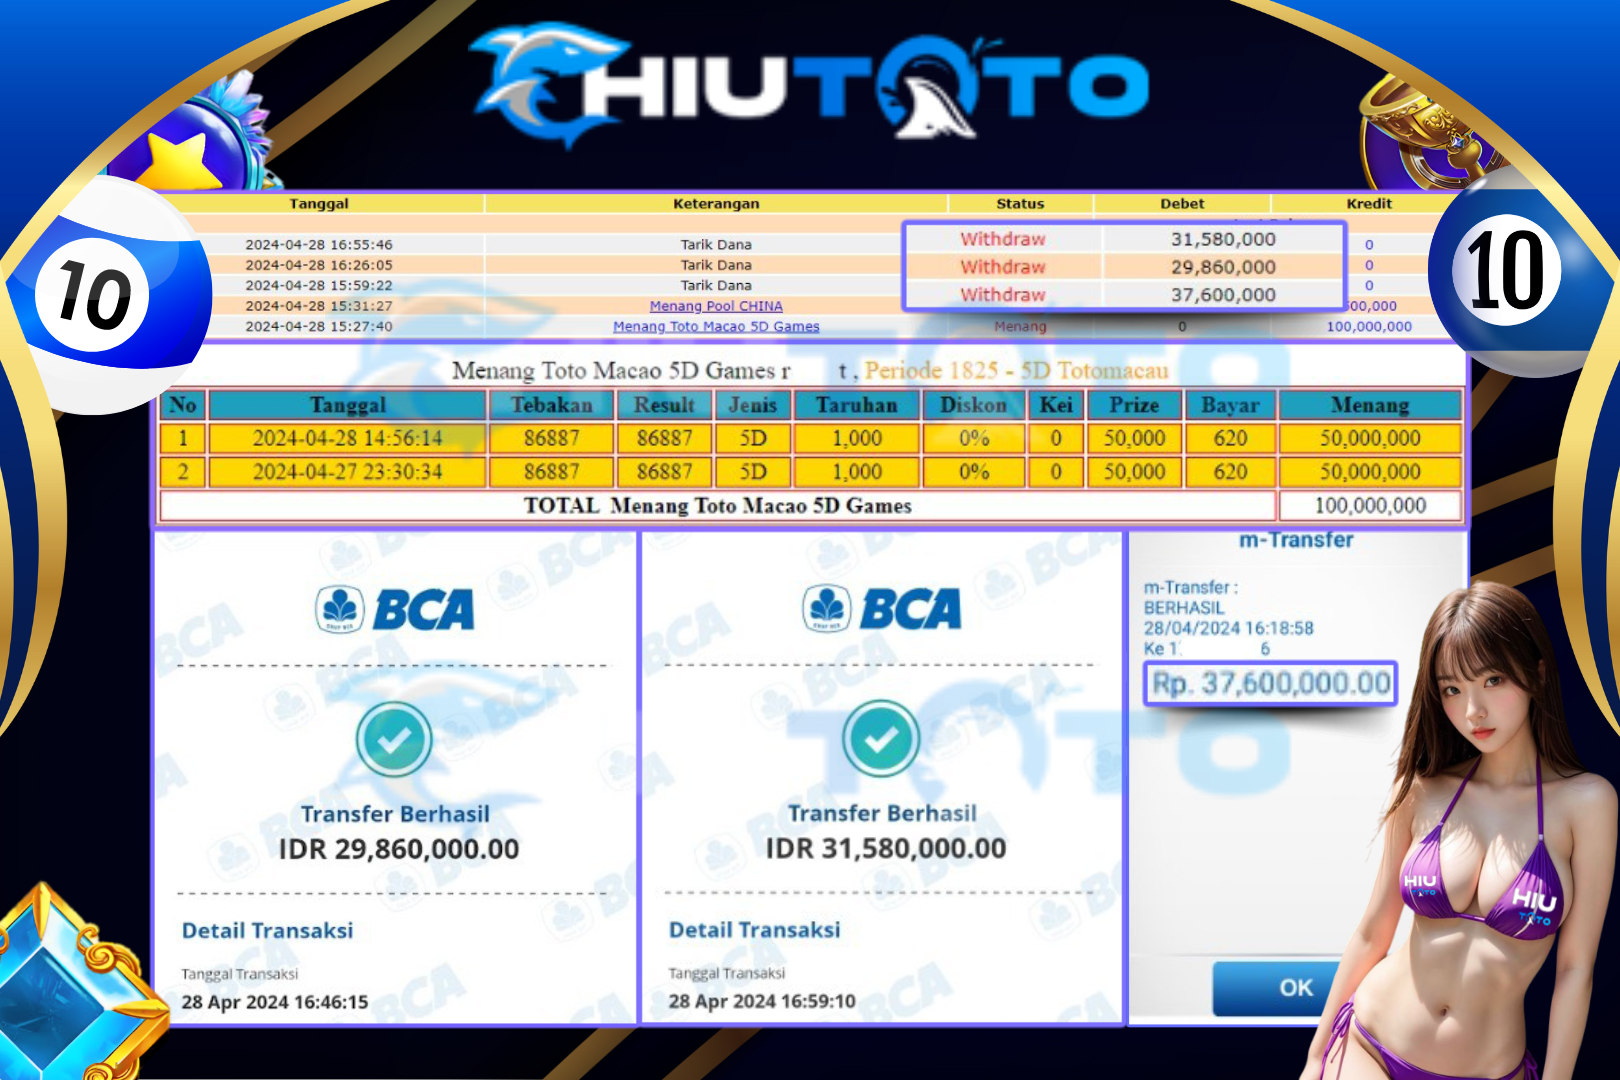 HIUTOTO – Jackpot Starlight Princess Rp 10.000.000